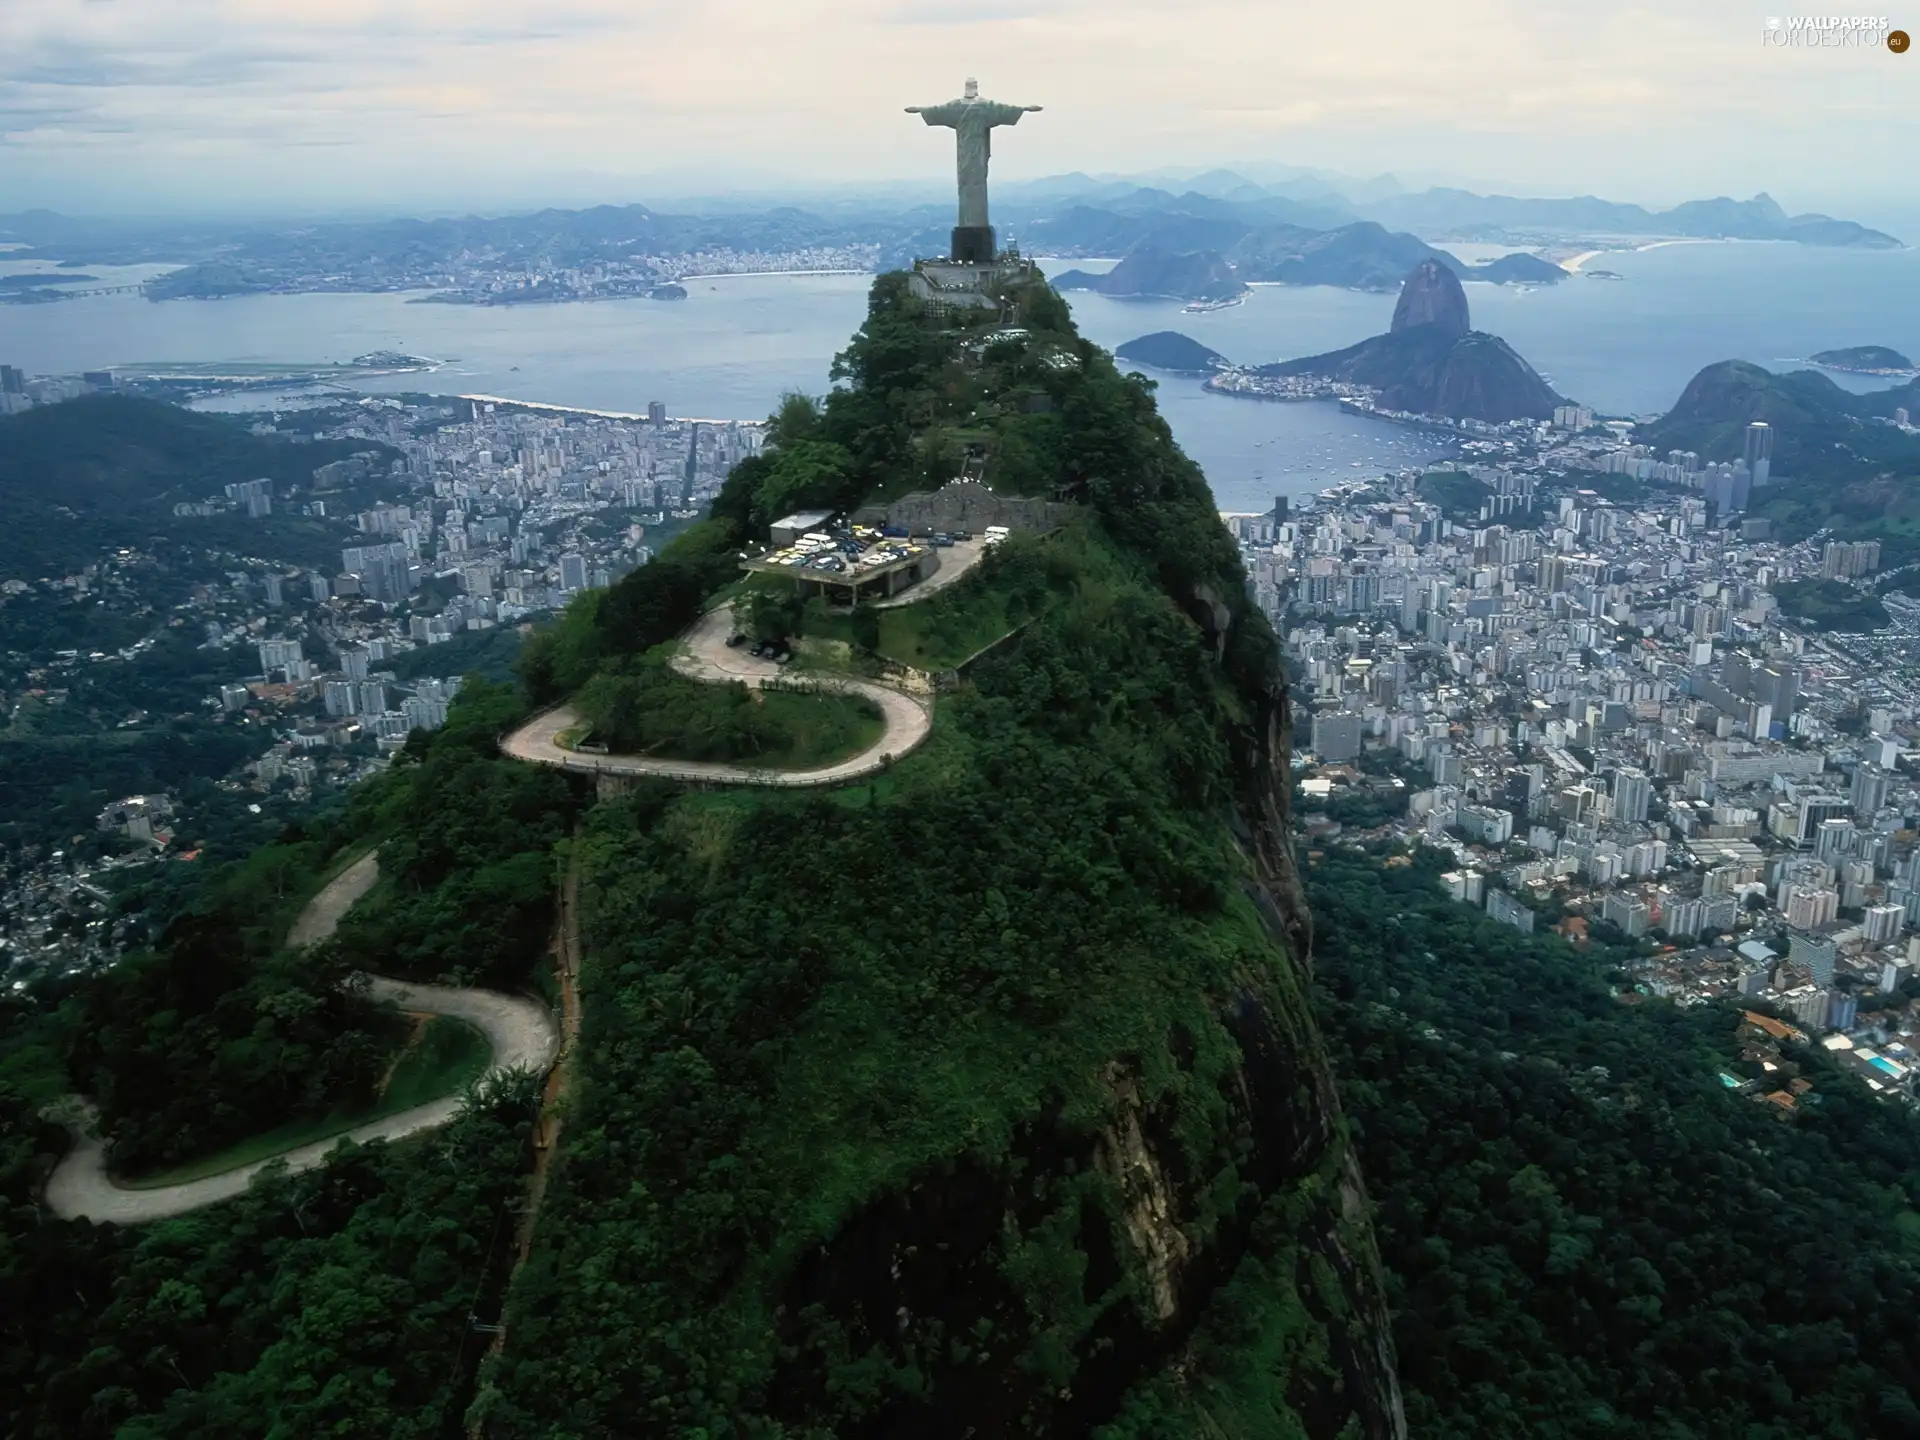 Brazil, Rio de Janeiro, Statue of Christ the Redeemer